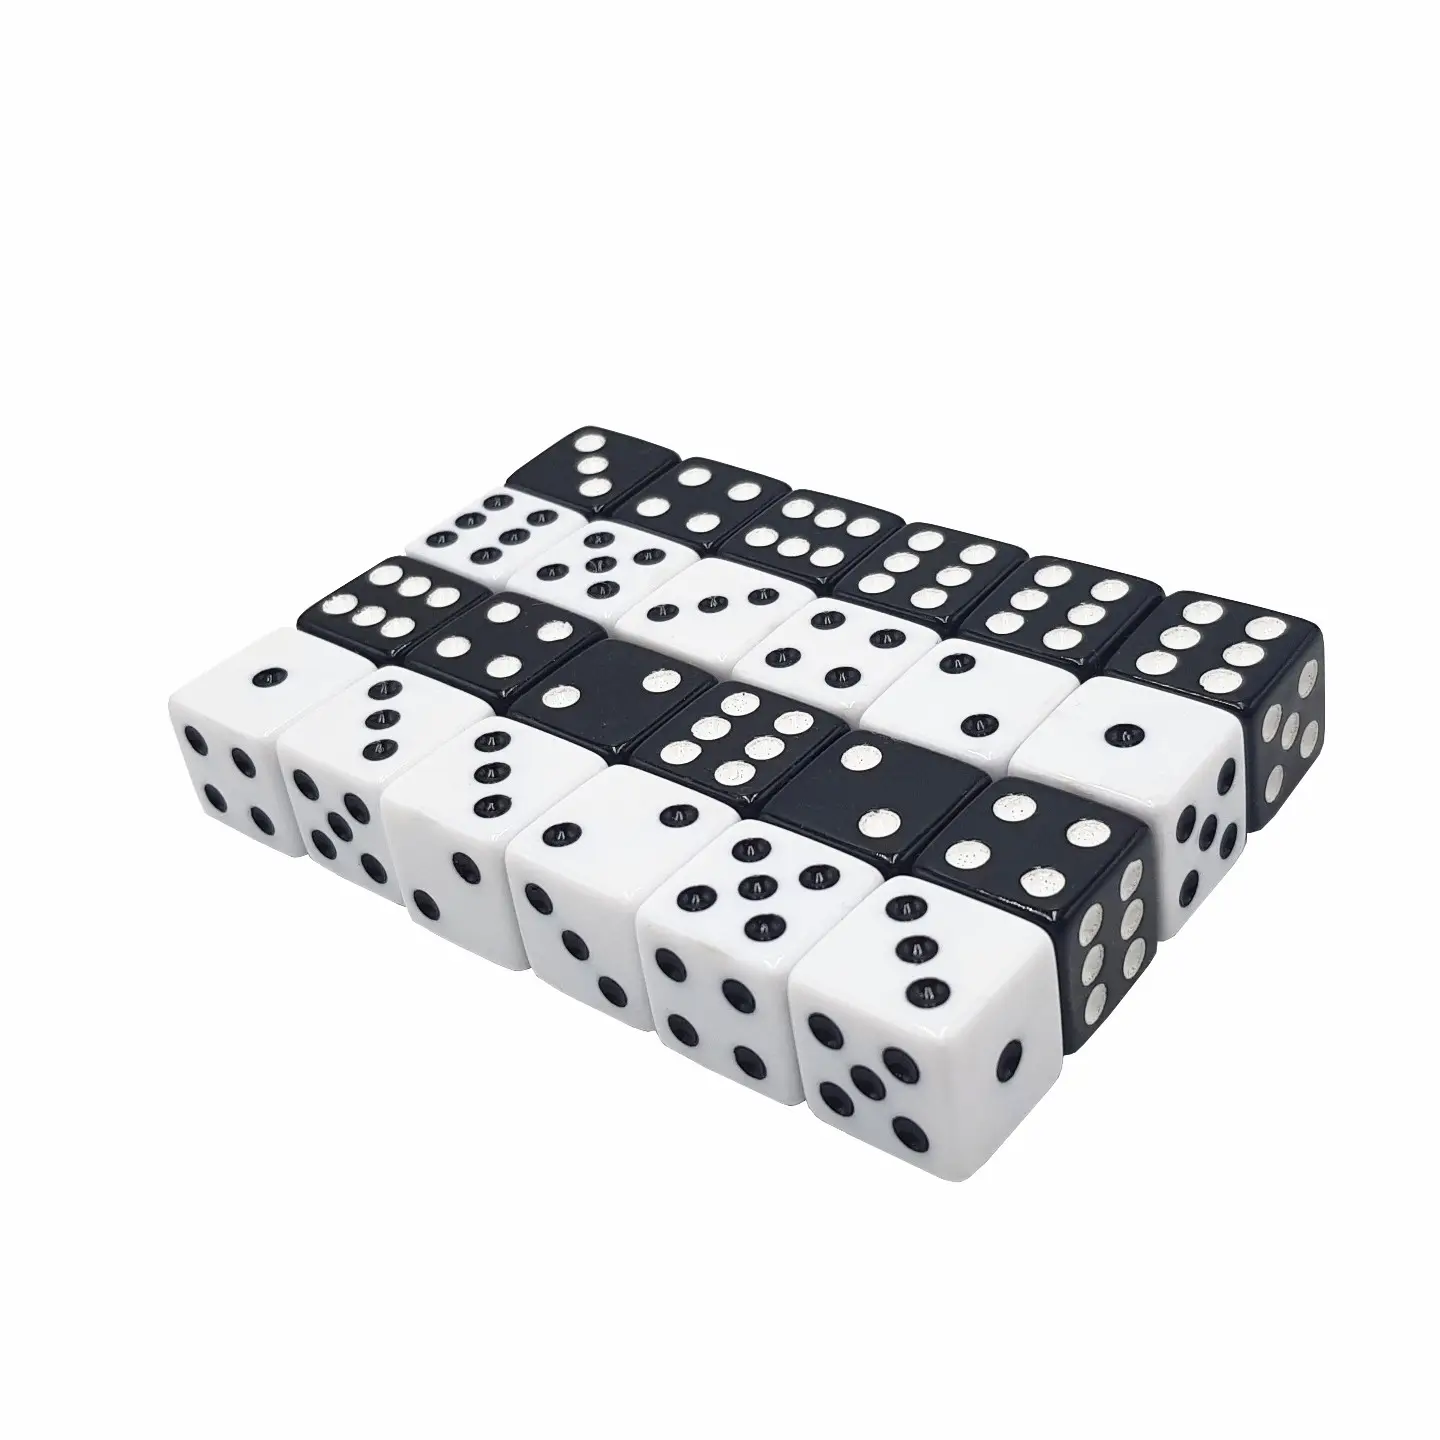 Dadu Kotak Putih D6 16Mm dengan Bintik Hitam Kustom Akrilik Polihedral Dadu Permainan Kasino